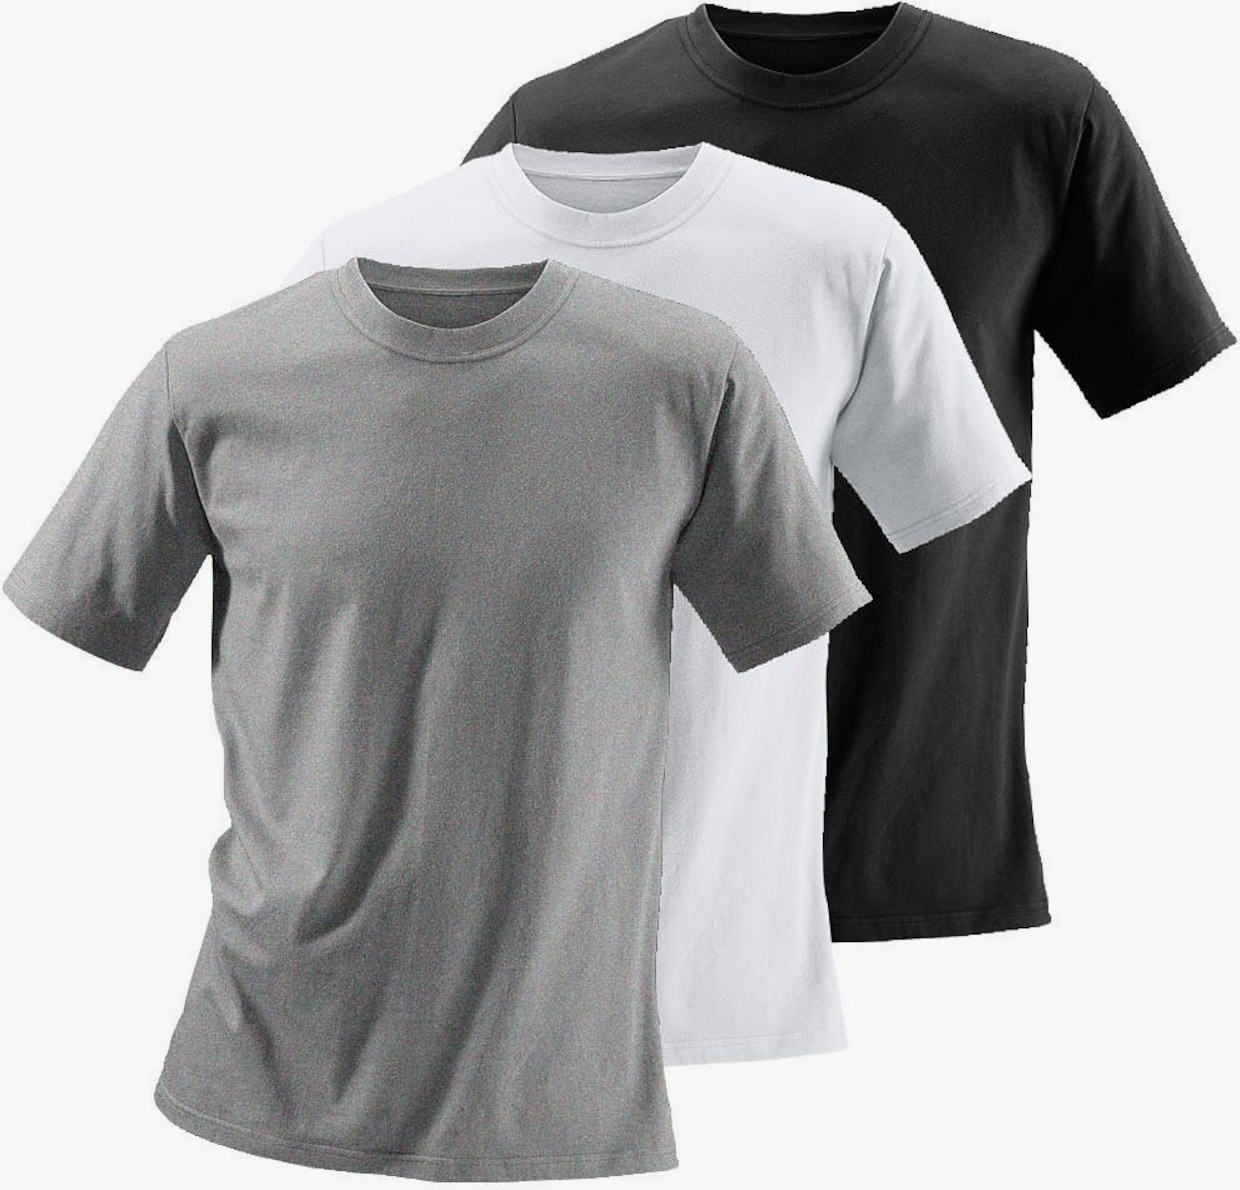 H.I.S T-Shirt - grau-meliert, weiß, schwarz